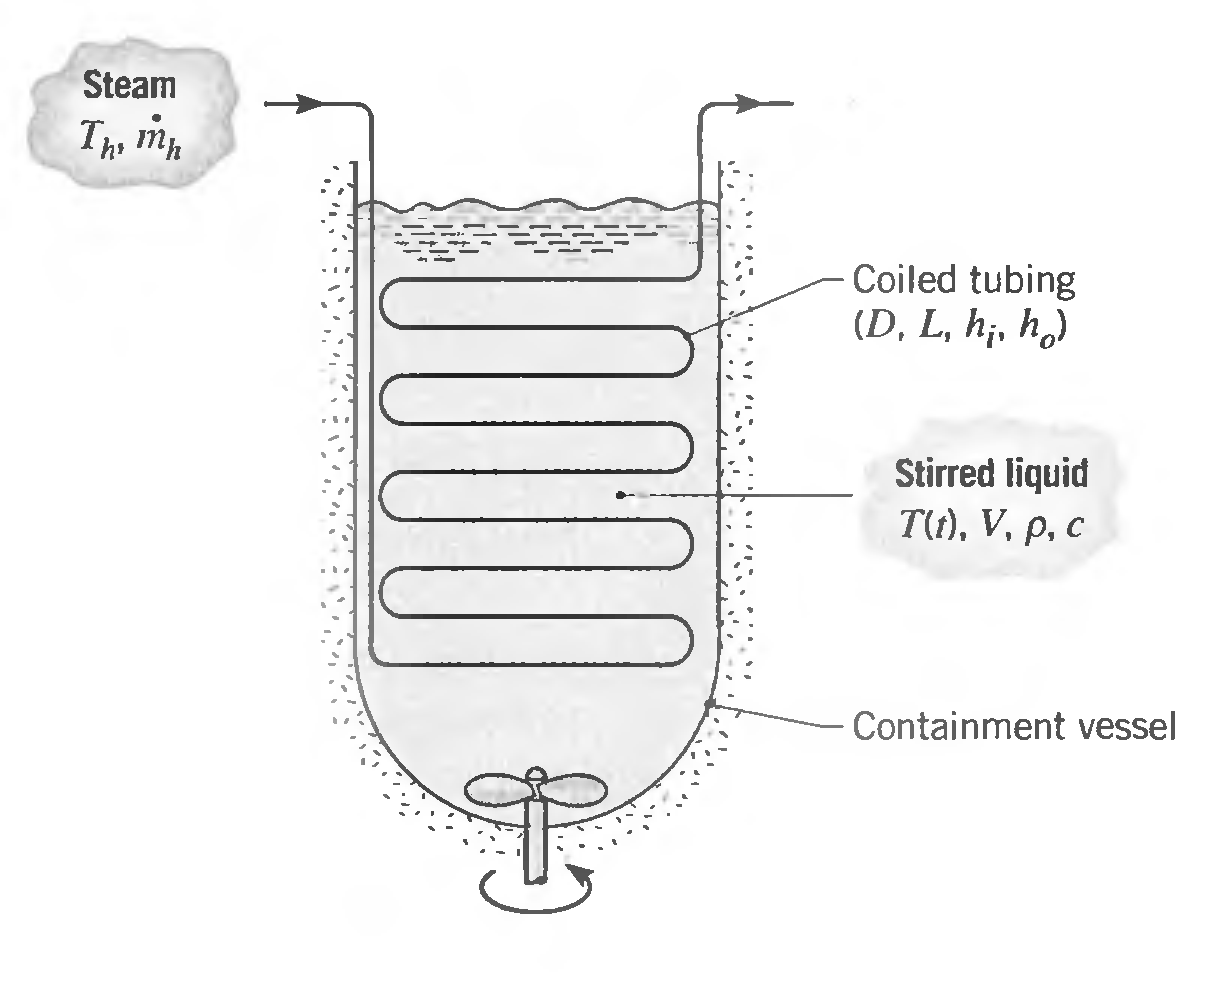 Steam Coiled tubing (D, L, h¡, h) Stirred liquid T1), V, p, c Containment vessel 